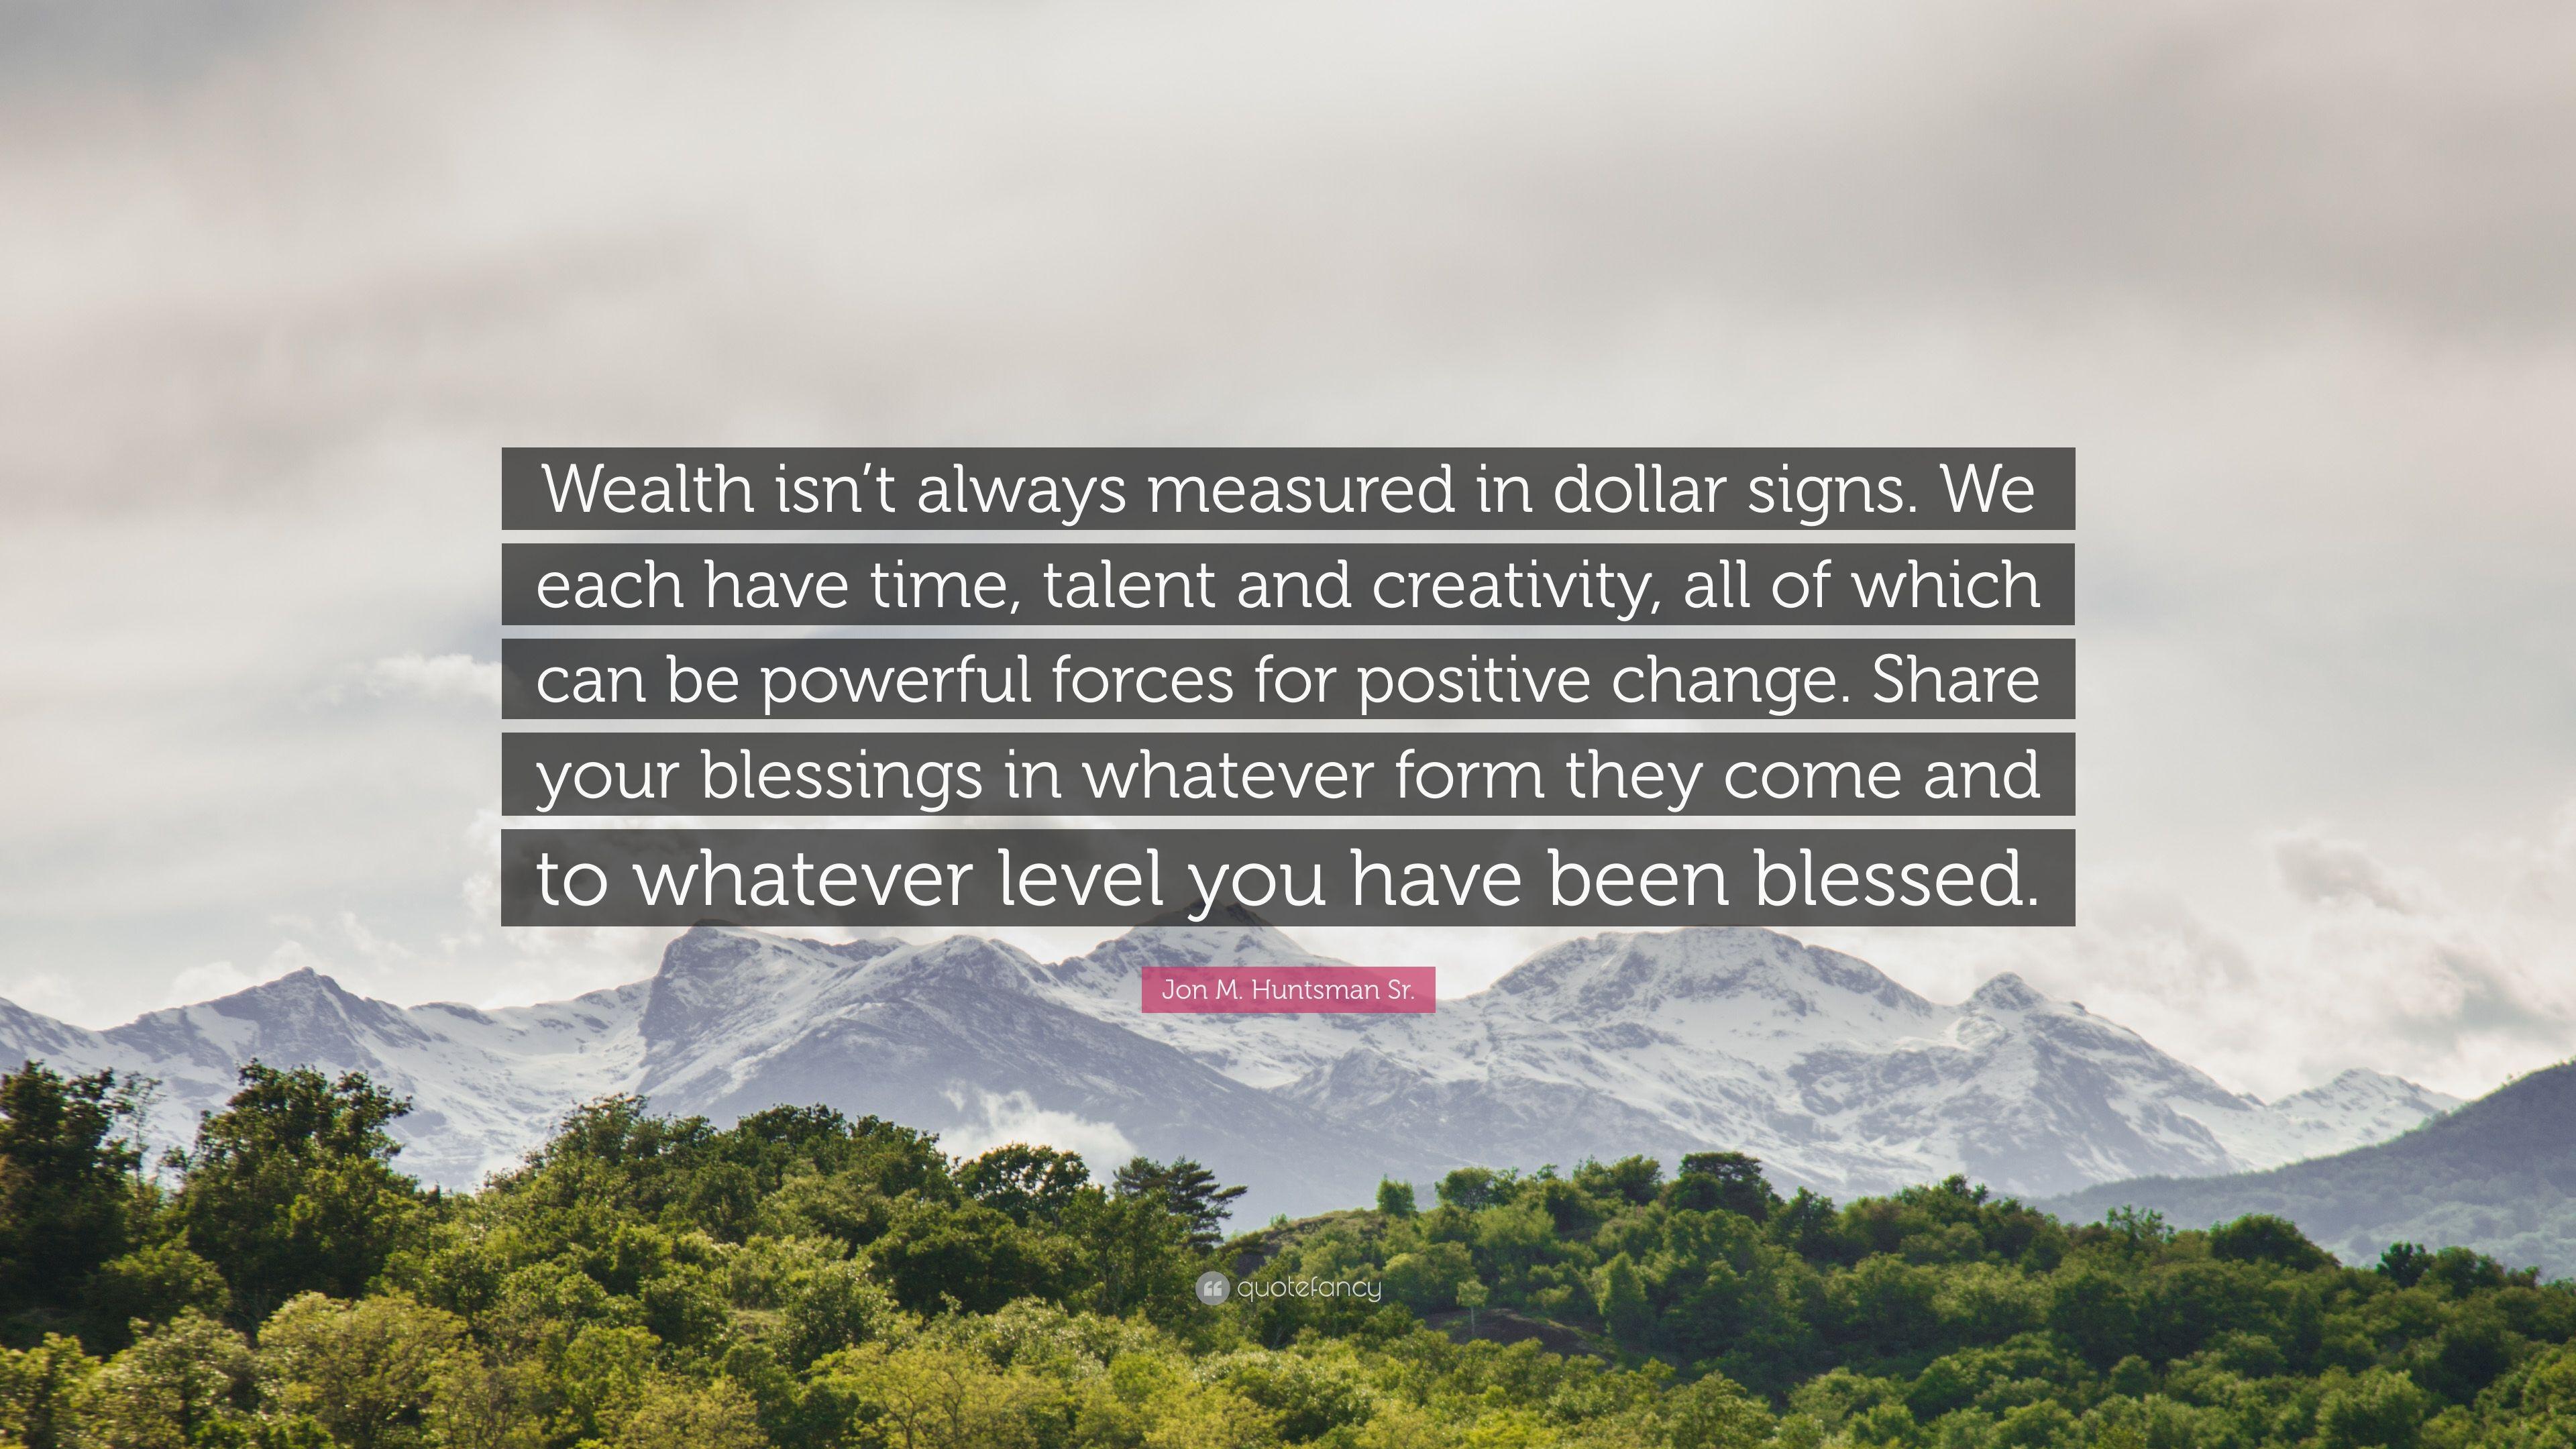 Jon M. Huntsman Sr. Quote: “Wealth isn't always measured in dollar